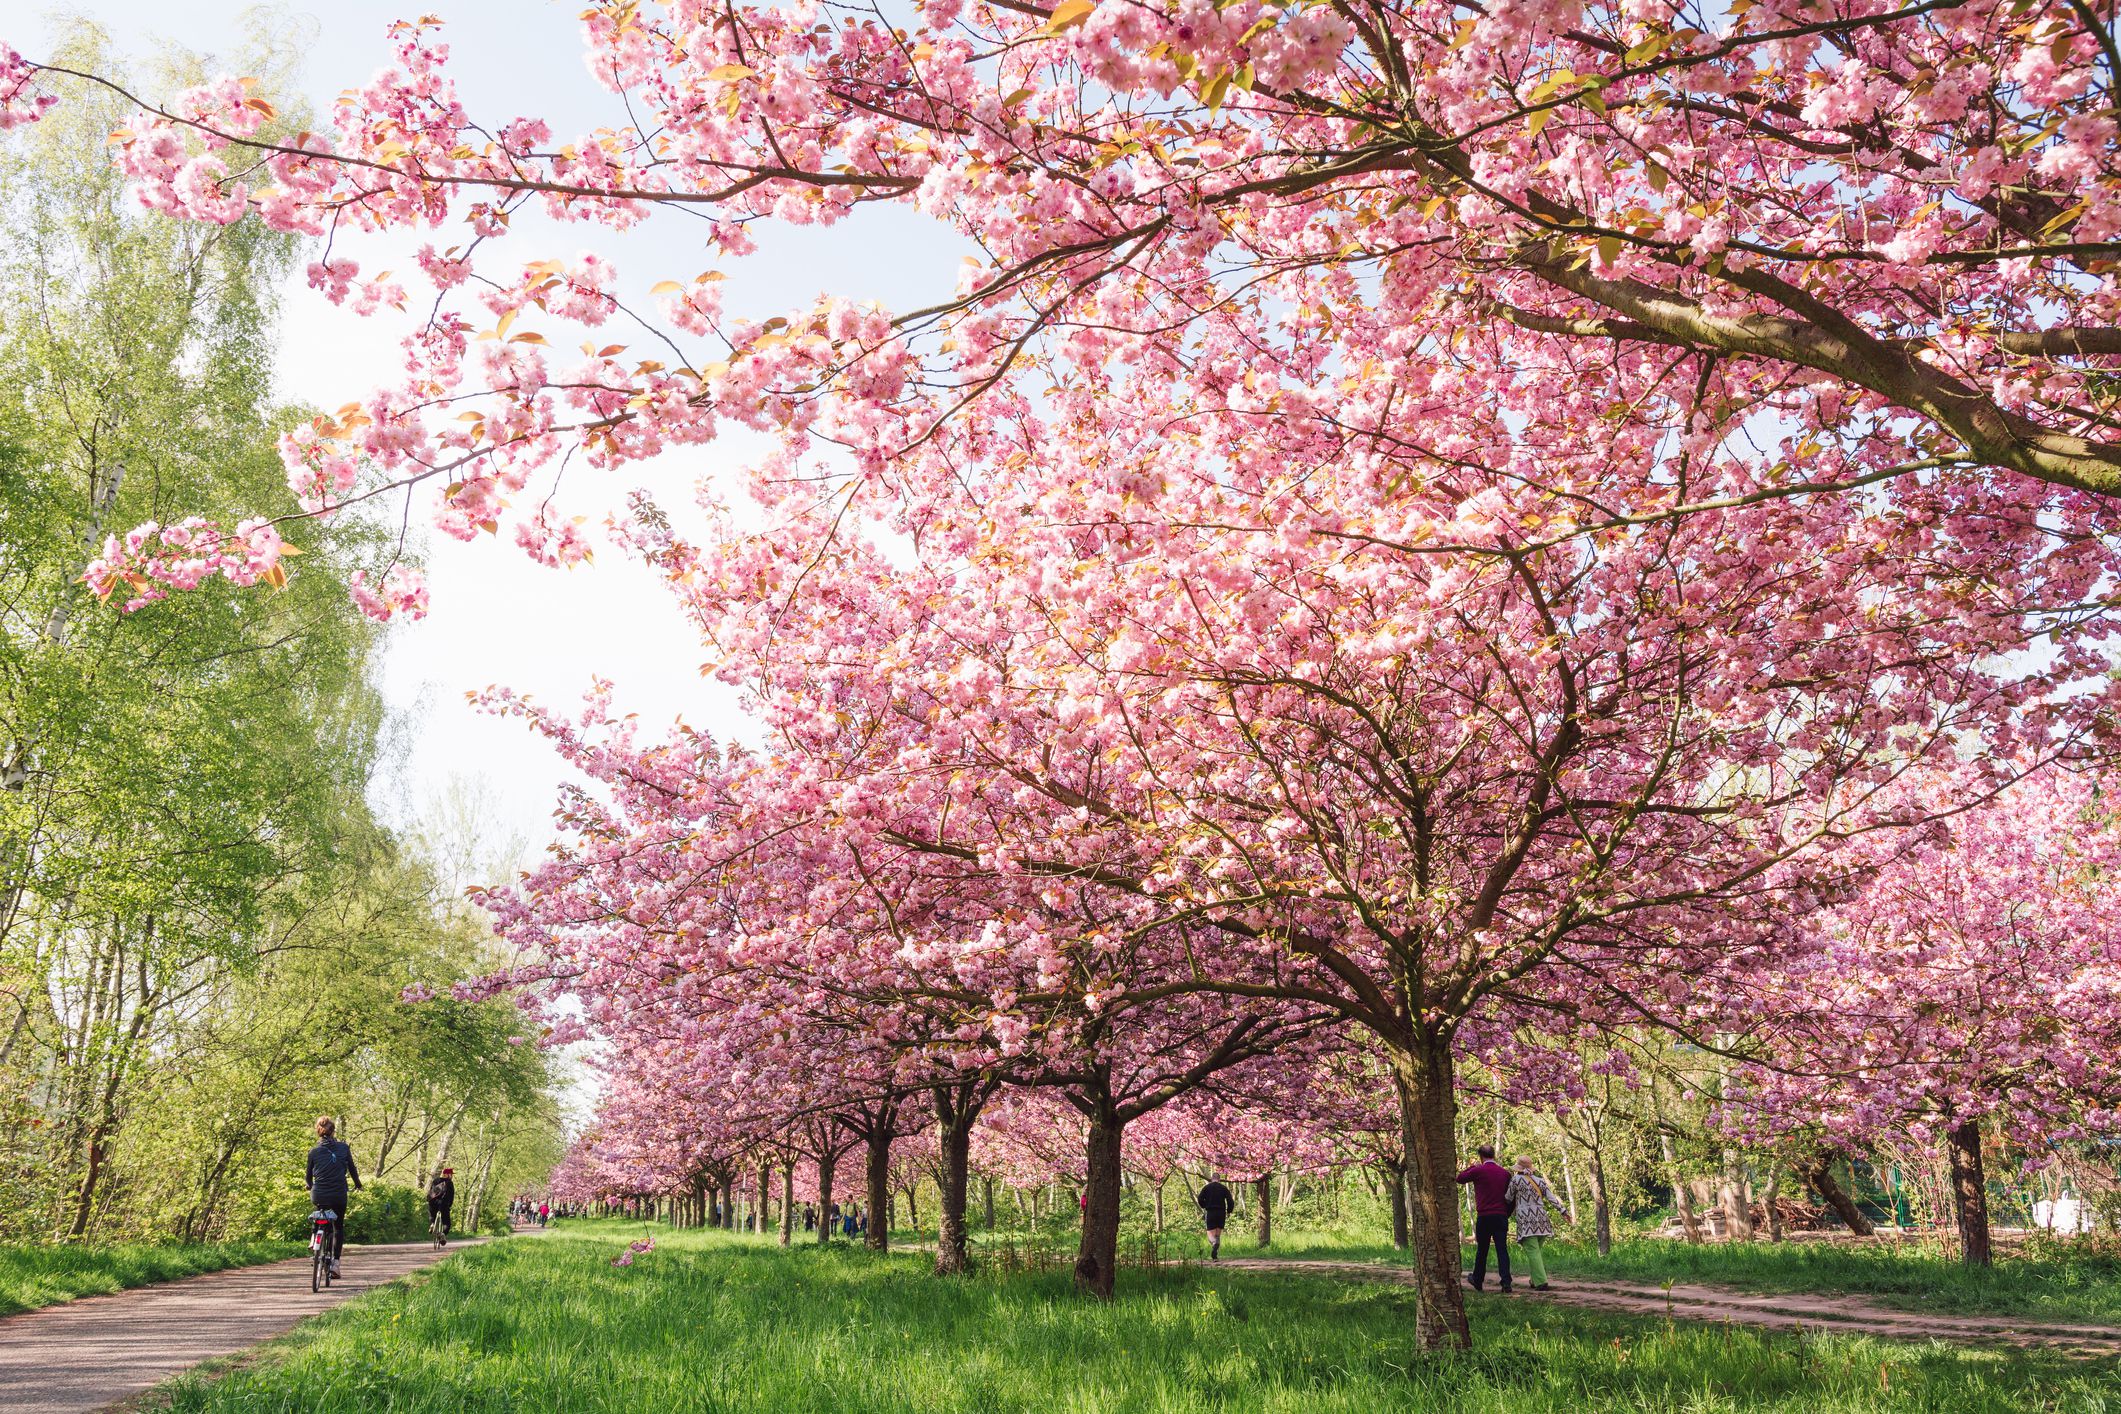 Berlin Garten Der Welt Best Of Cherry Blossoms In Germany